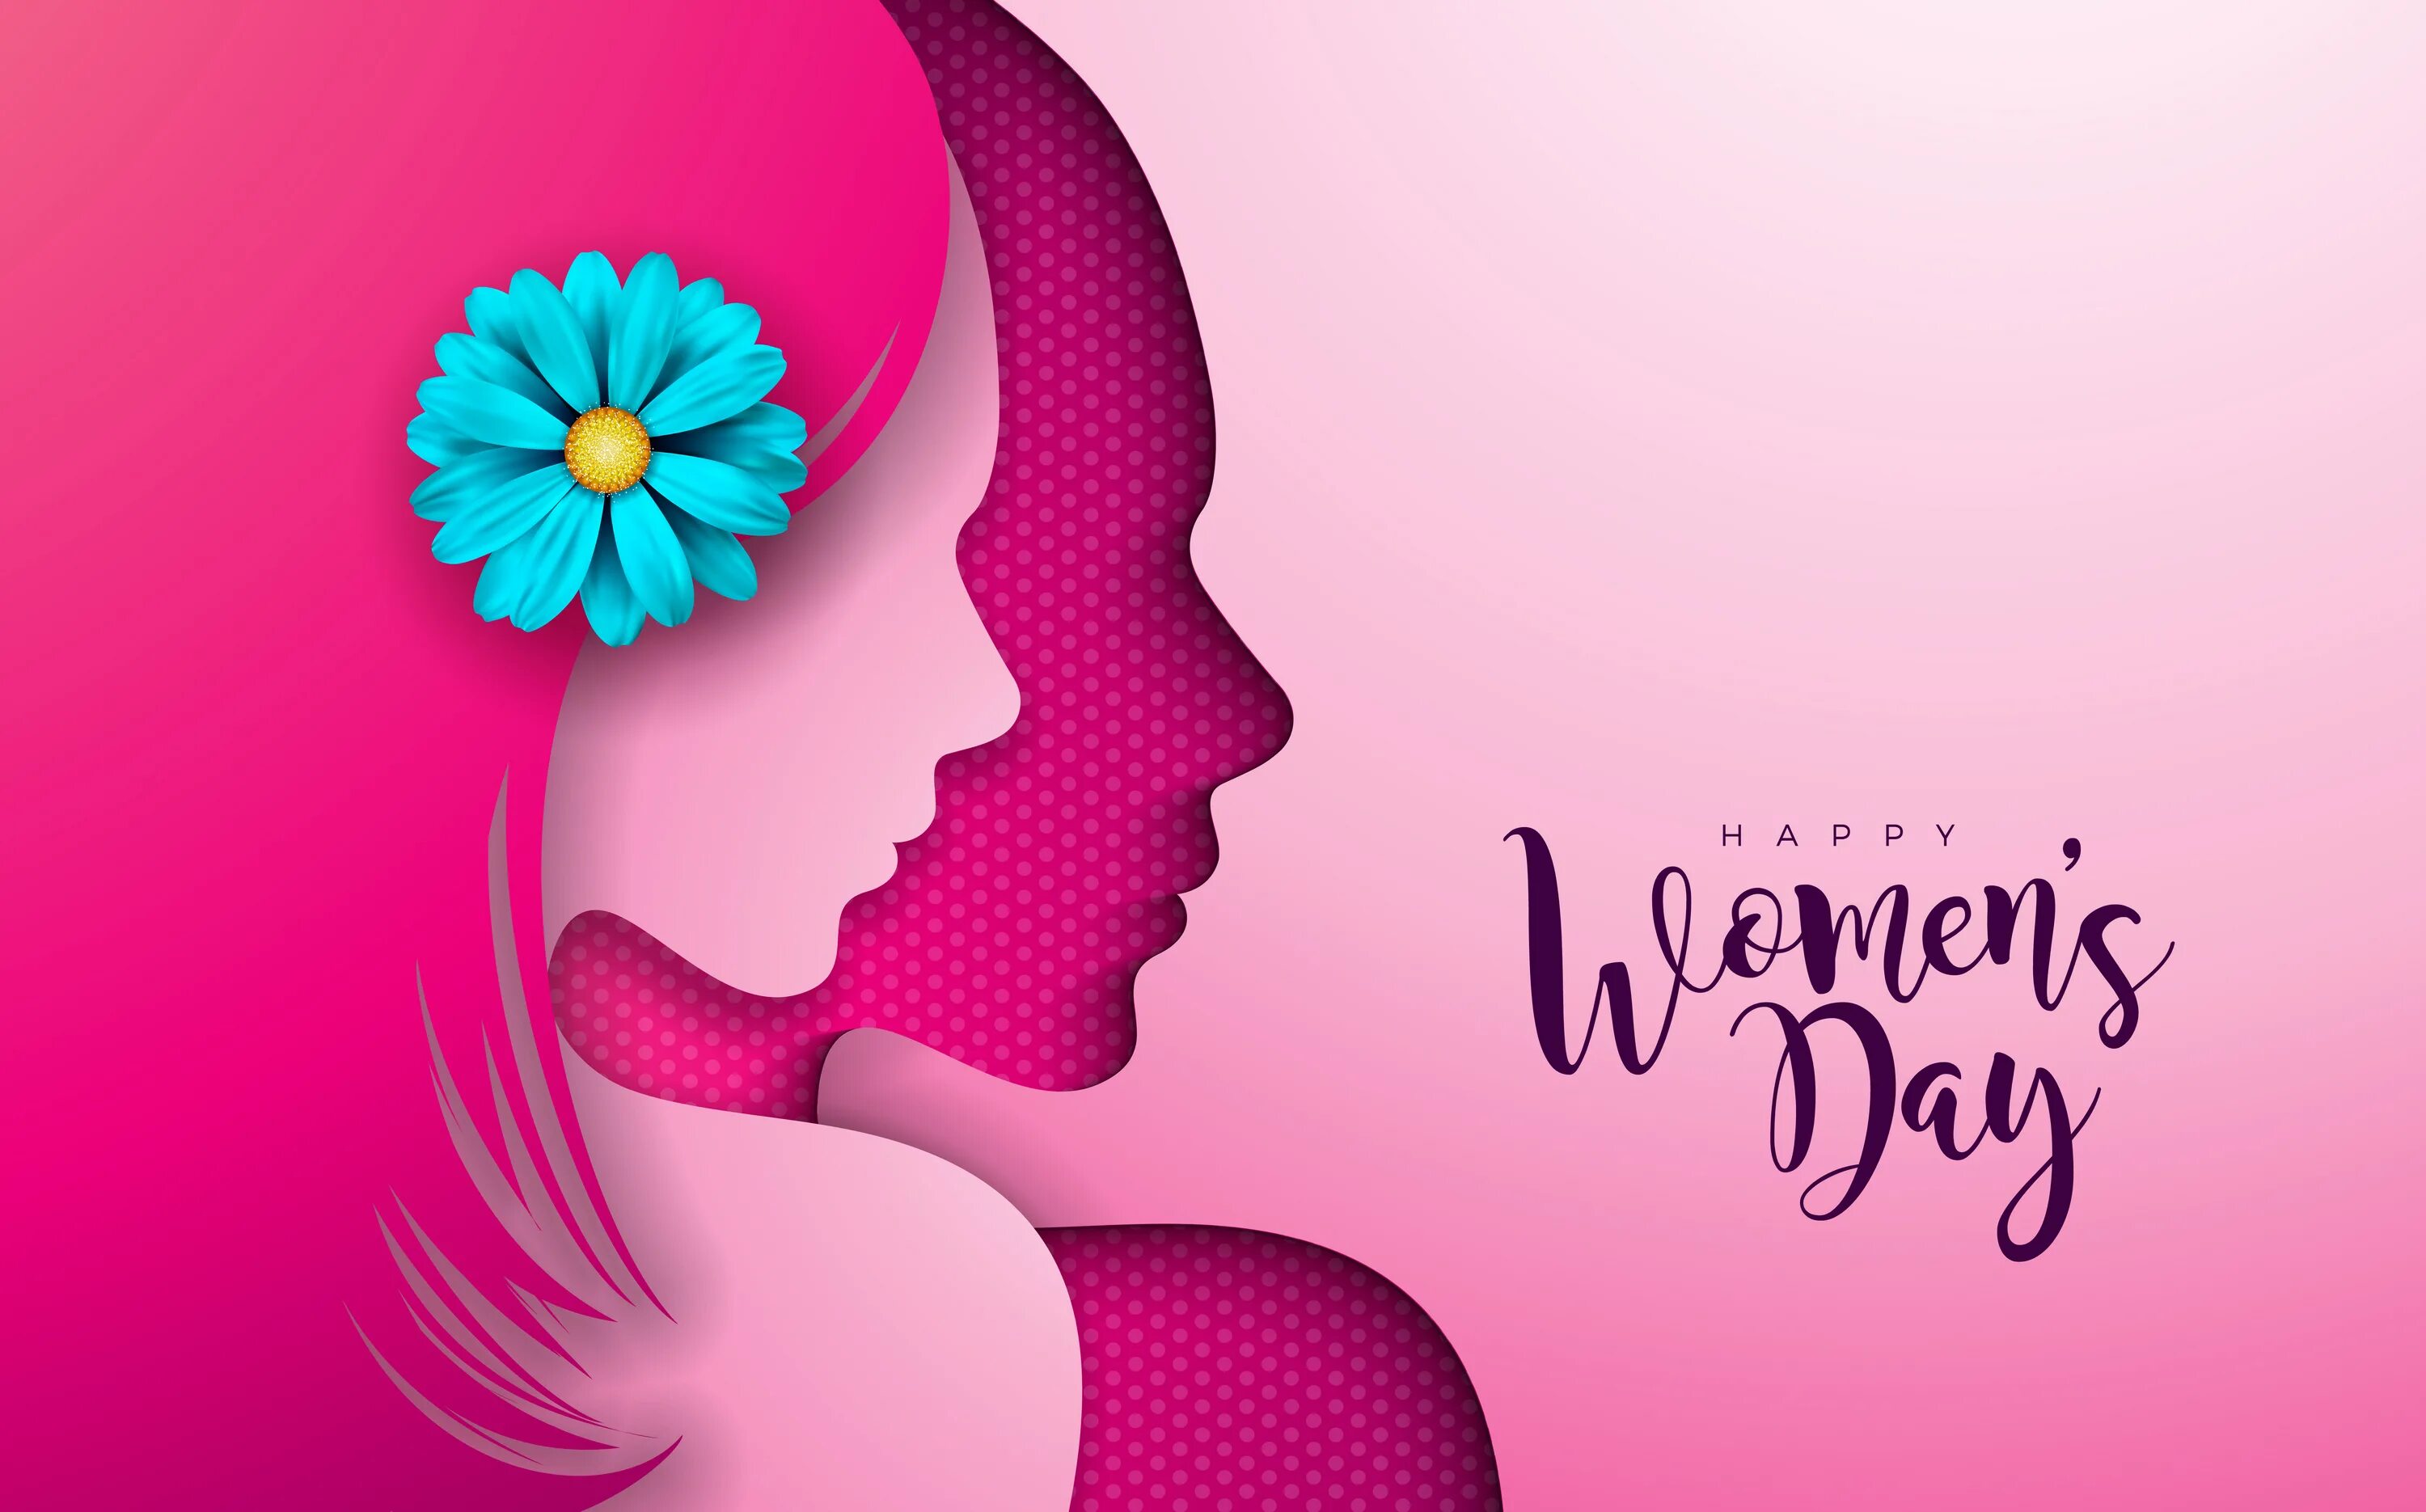 Открытка "women's Day". Women day in russia